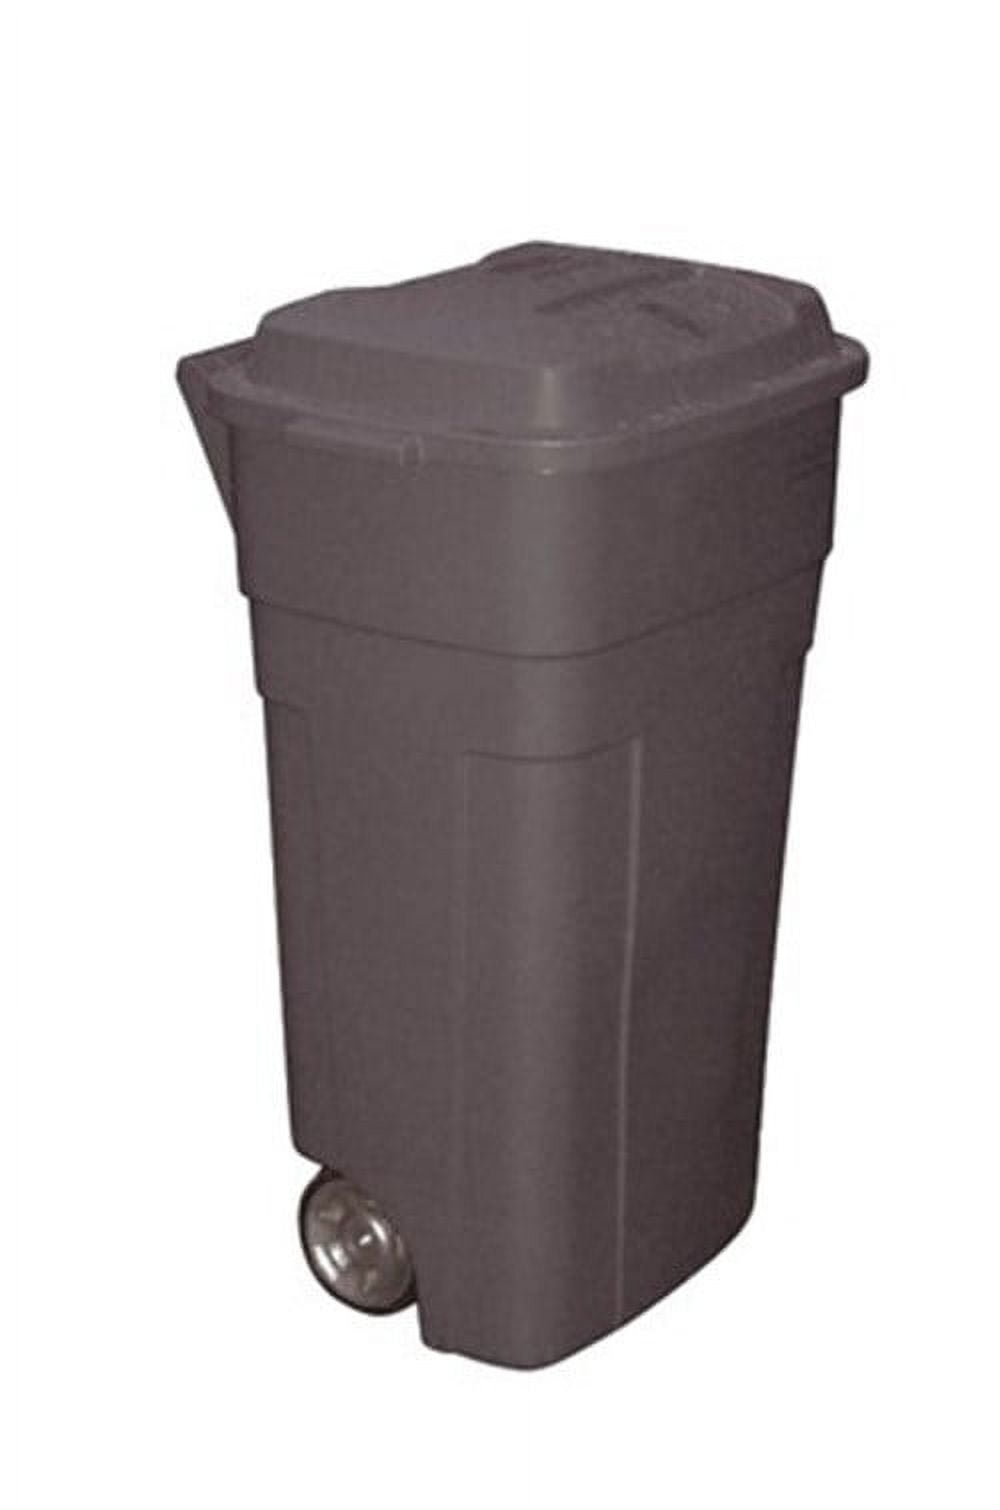 Rubbermaid Roughneck™ Non-Wheeled Trash Can 32 Gallon - Endicott, NY -  Owego, NY - Owego Endicott Agway